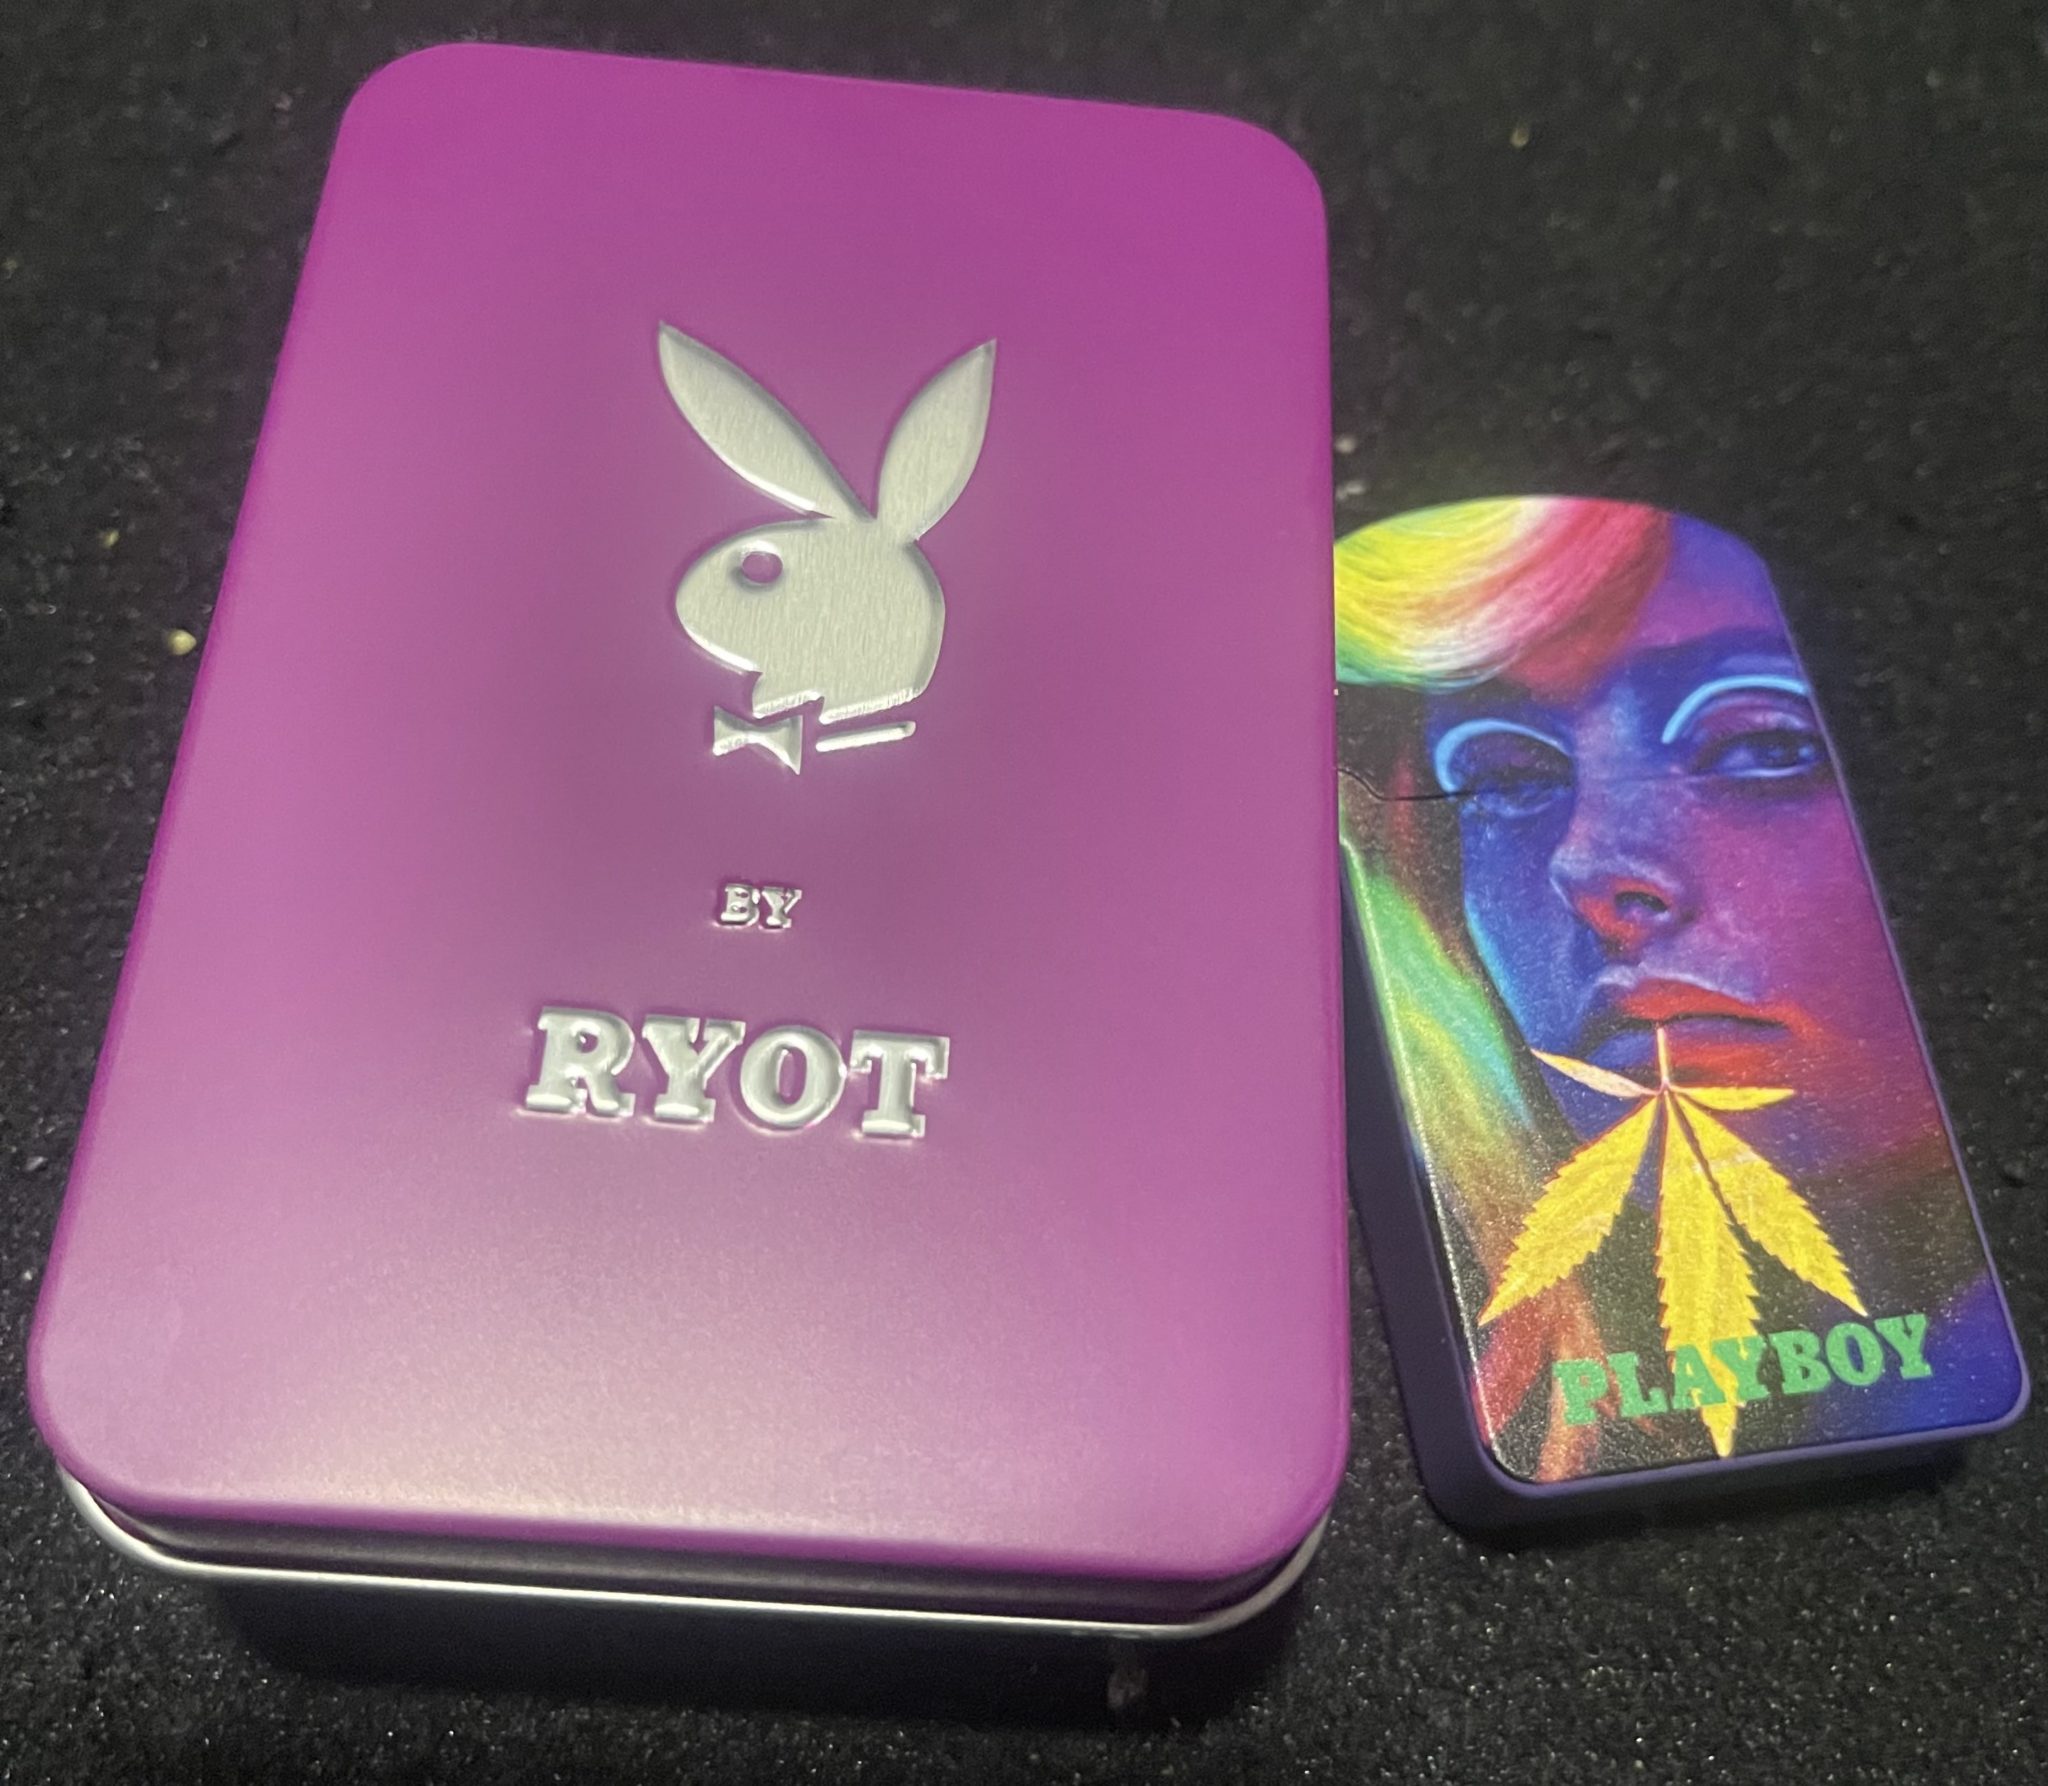 ryot playboy battery box